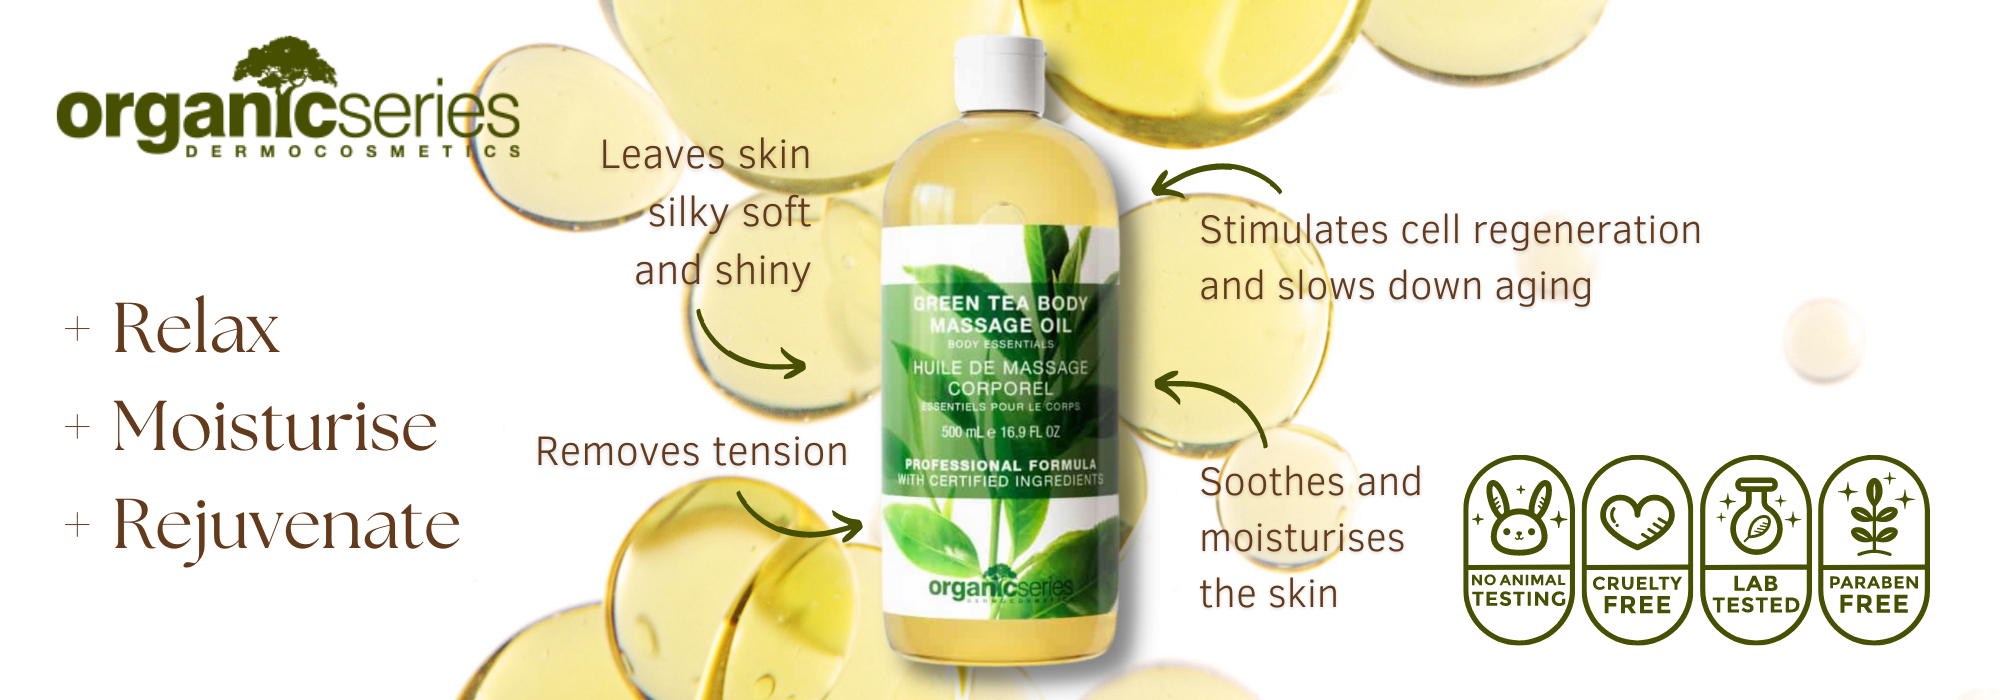 green tea body massage oil by organic series